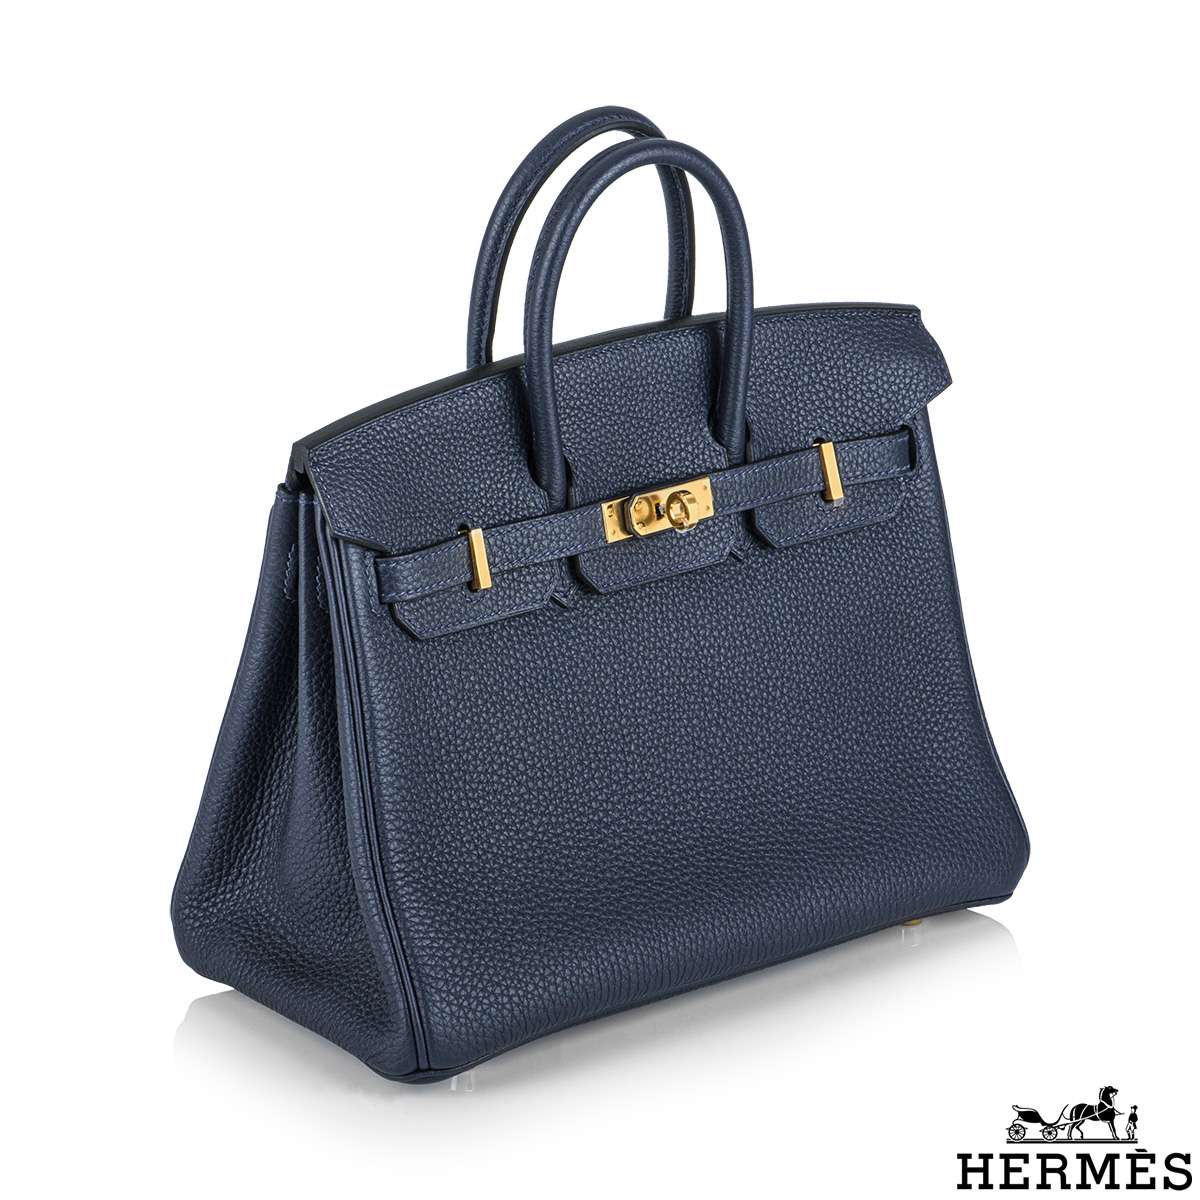 Hermés Birkin 25 Handbag